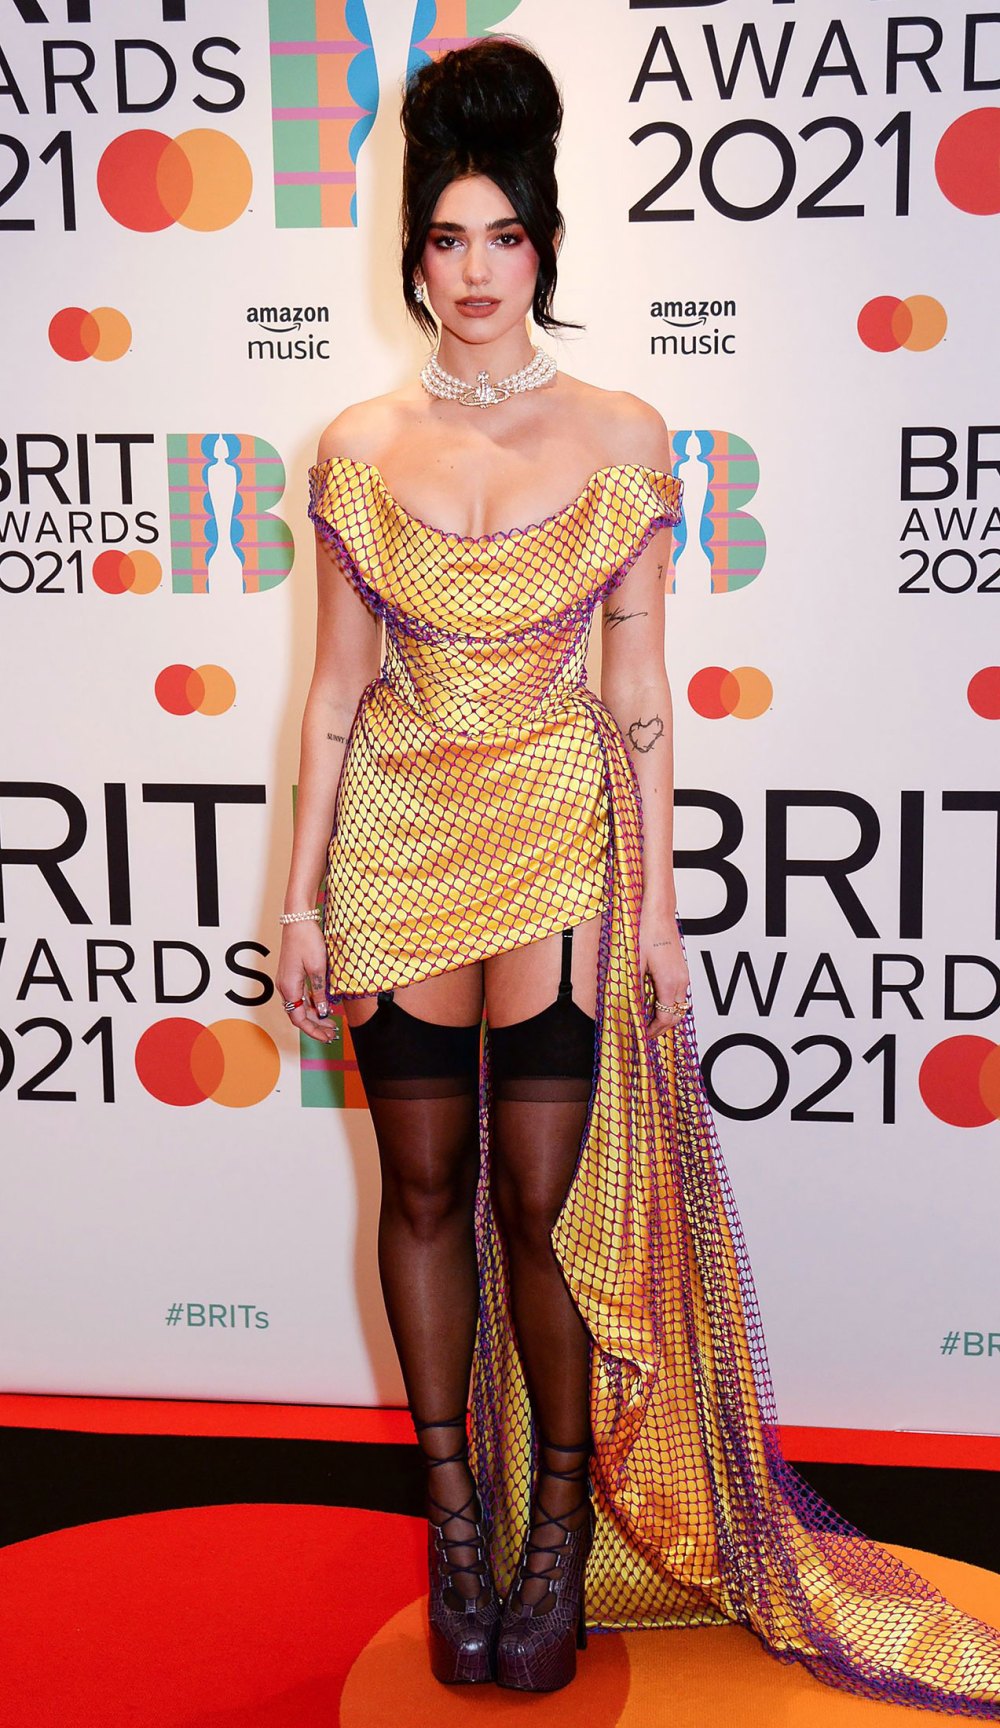 BRIT Awards 2021 Red Carpet Fashion, Dresses, Suits